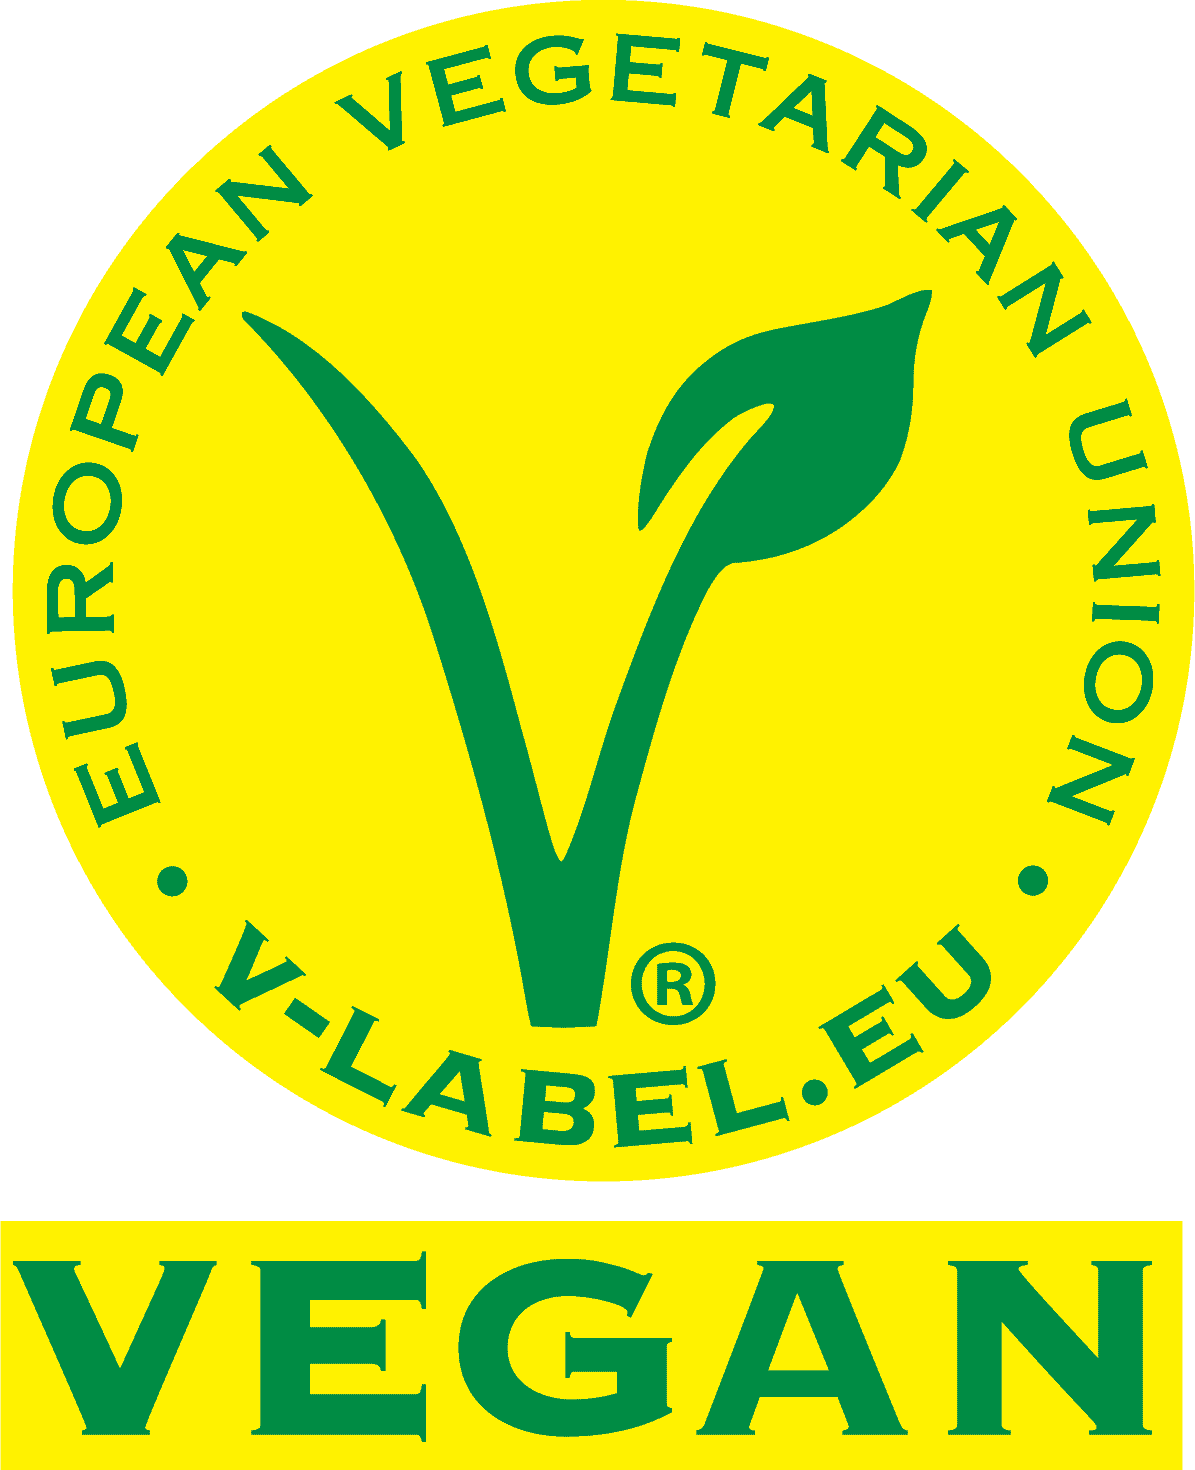 V-Label Vegan The V-Label is an internationally recognised, registered symbol for labelling vegan products and services.